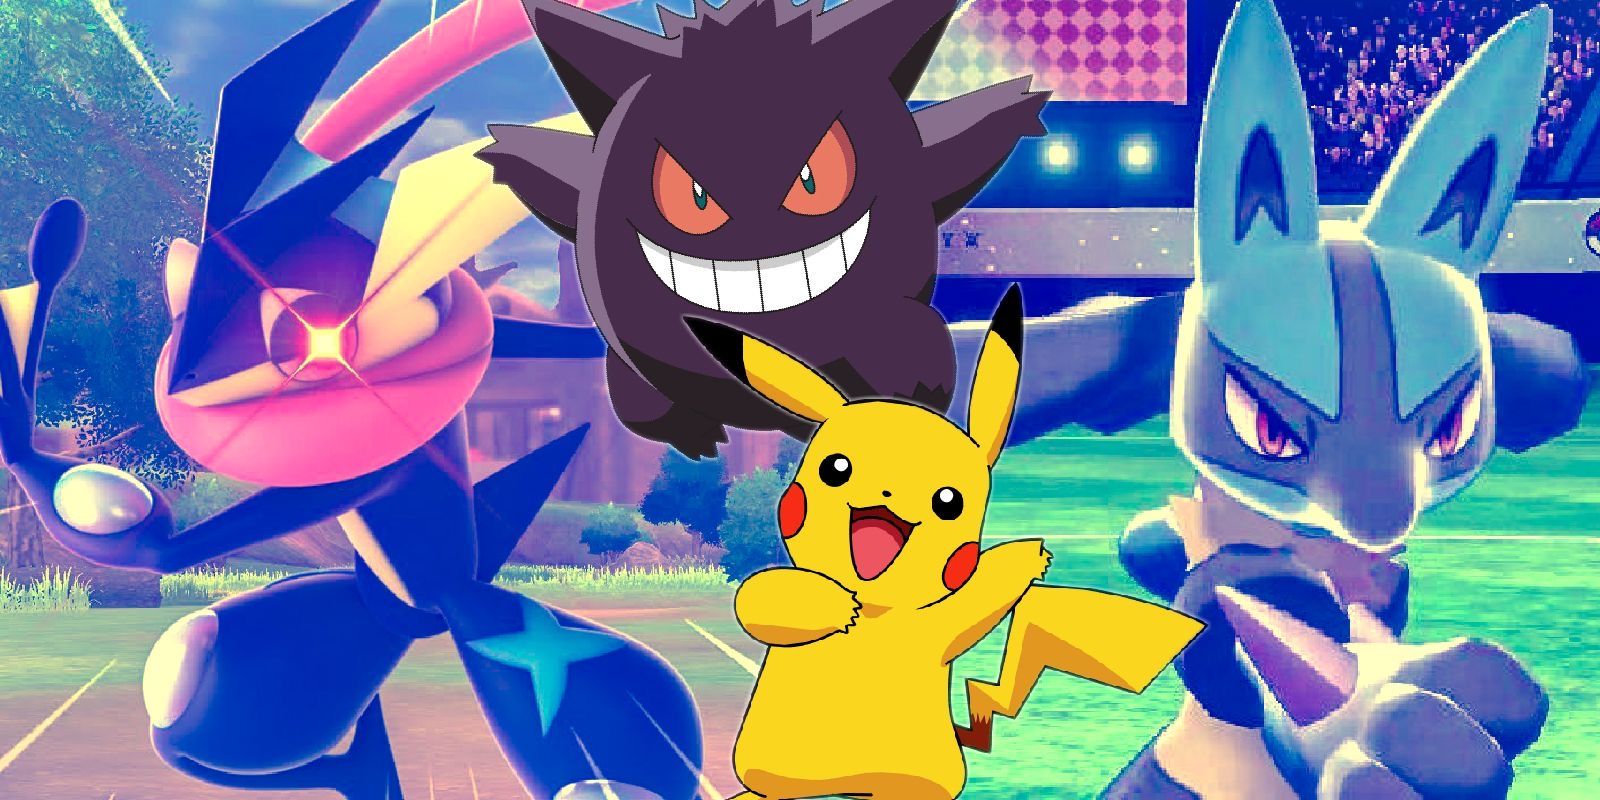 A composite image of Gengar, Pikachu, Greninja, and Riolu from Pokemon gamesand anime